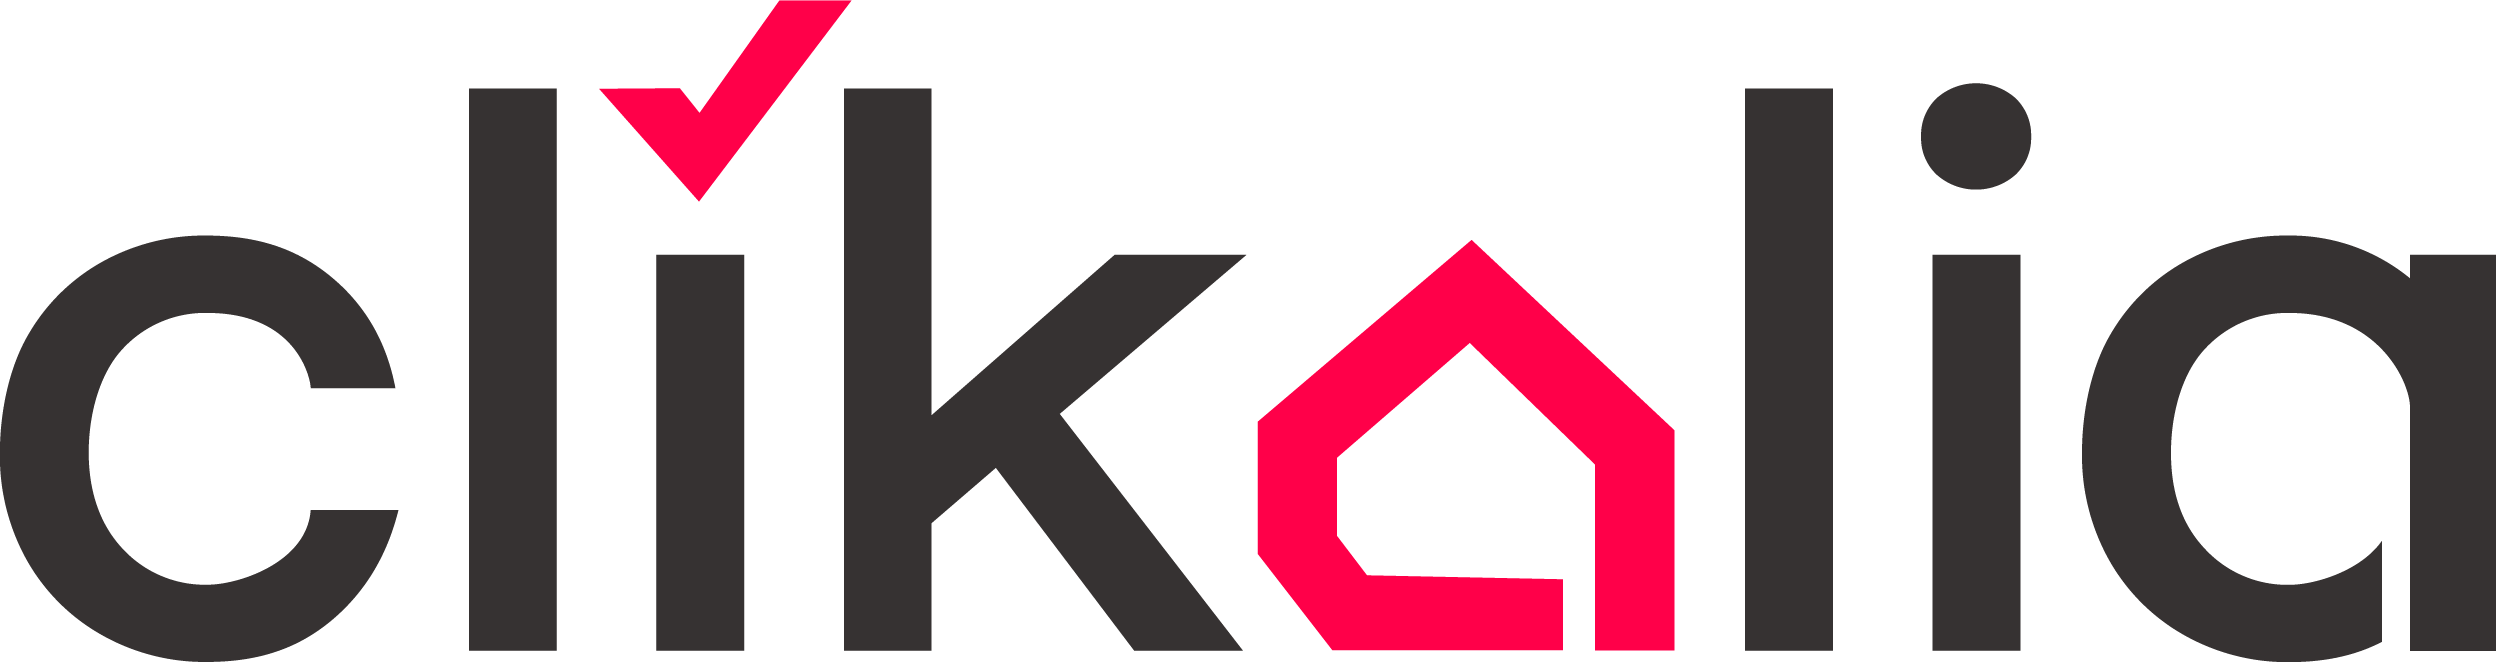 Vision Fund investment portfolio company Clikalia's logo